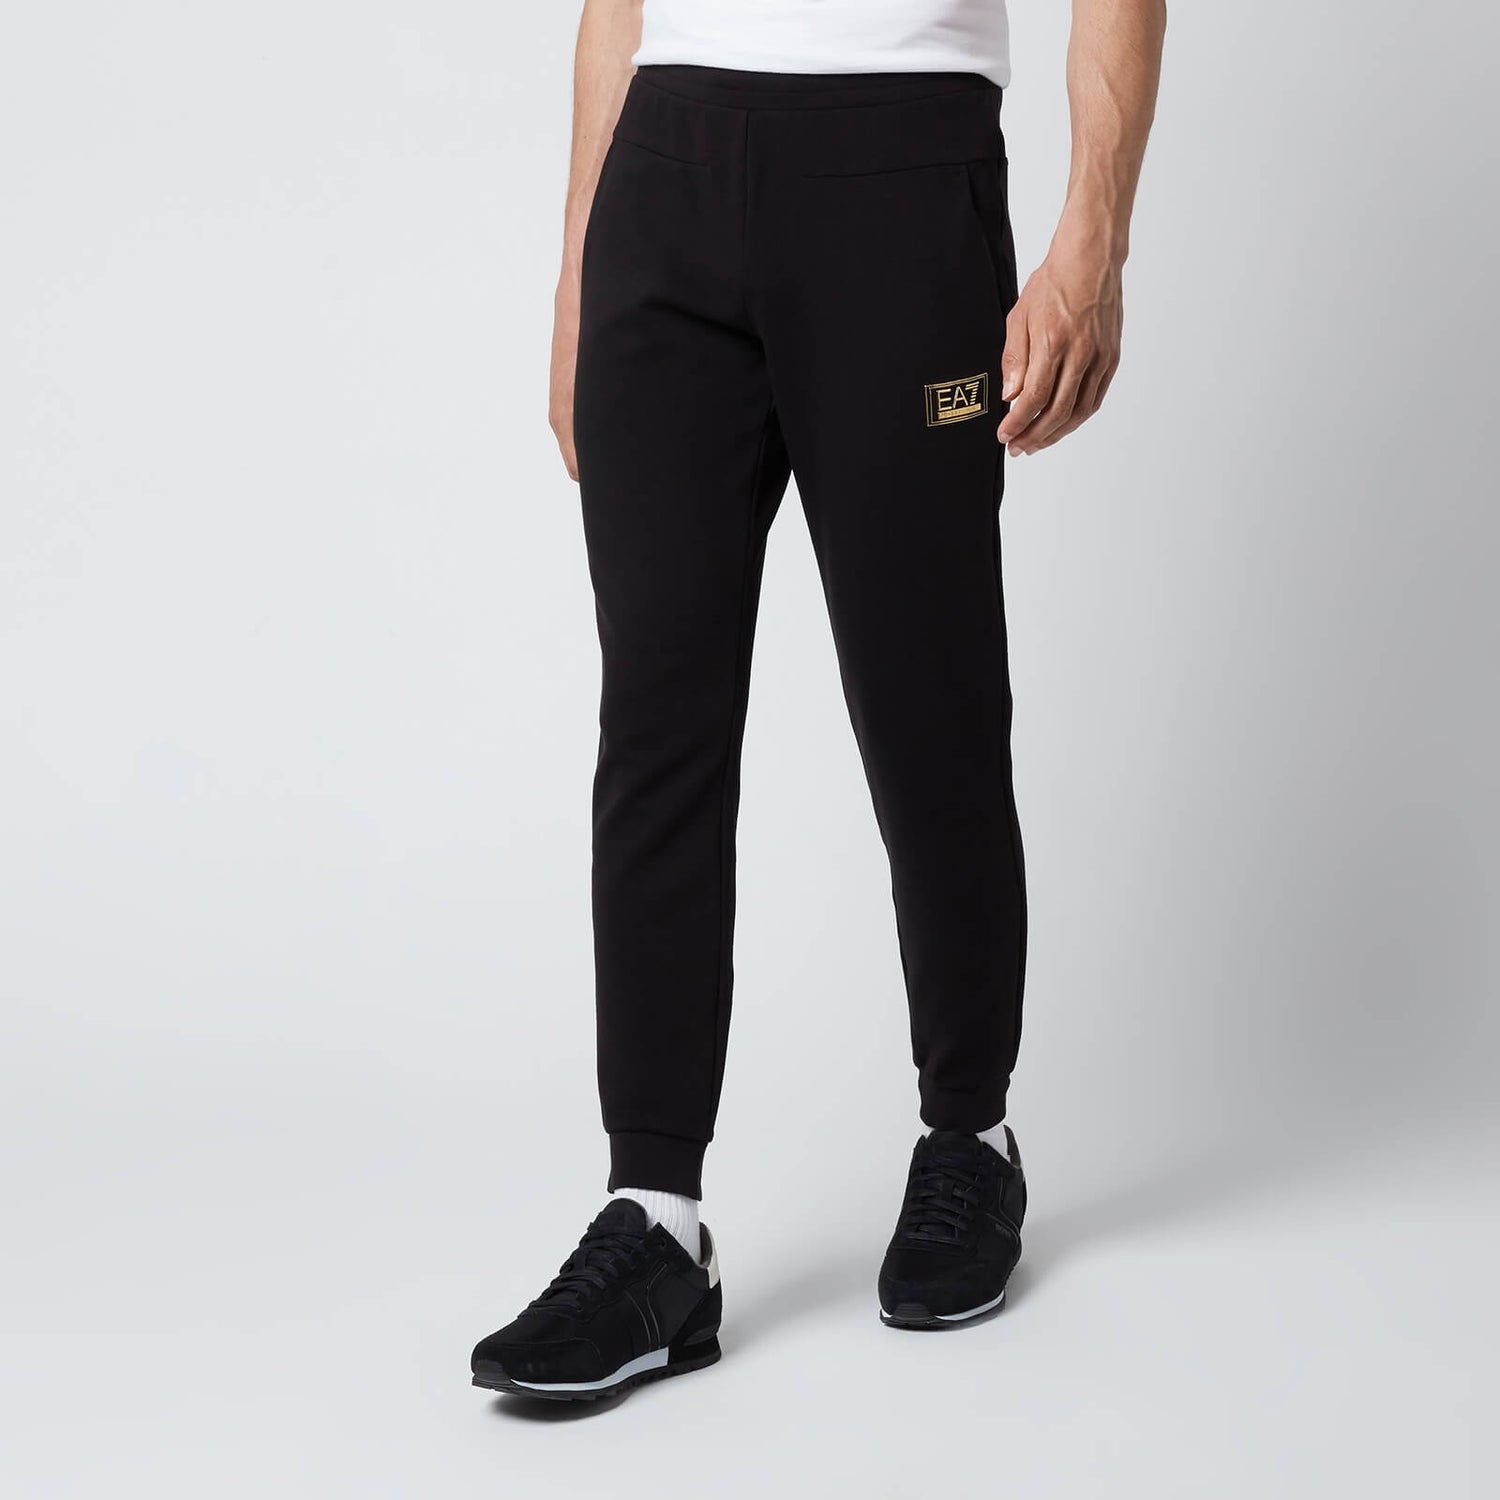 Emporio Armani EA7 Men's Detail Sweatpants - Black